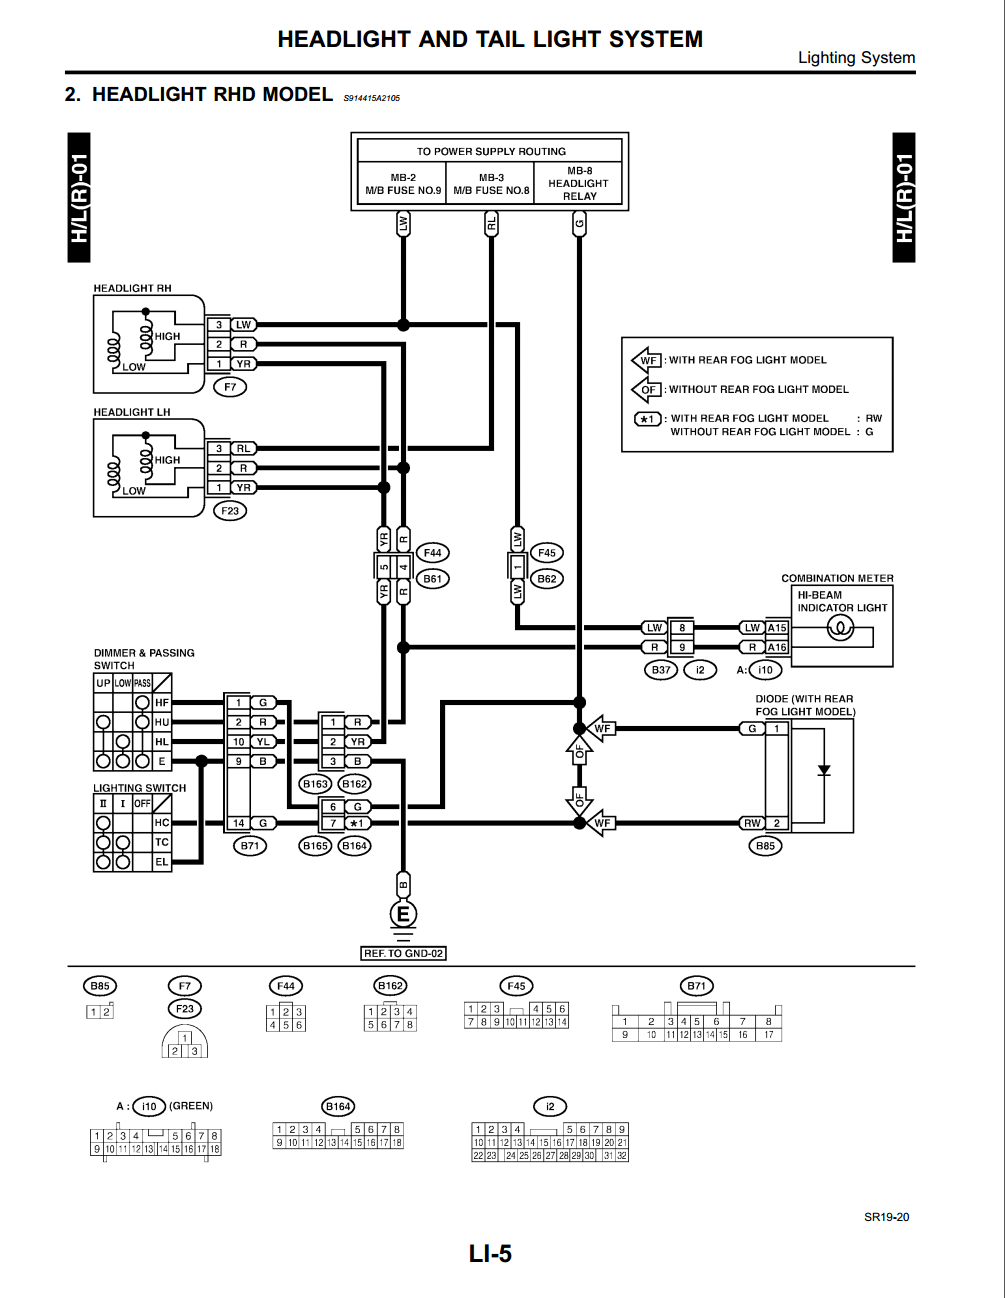 02 Jdm Wrx Wiring Diagram